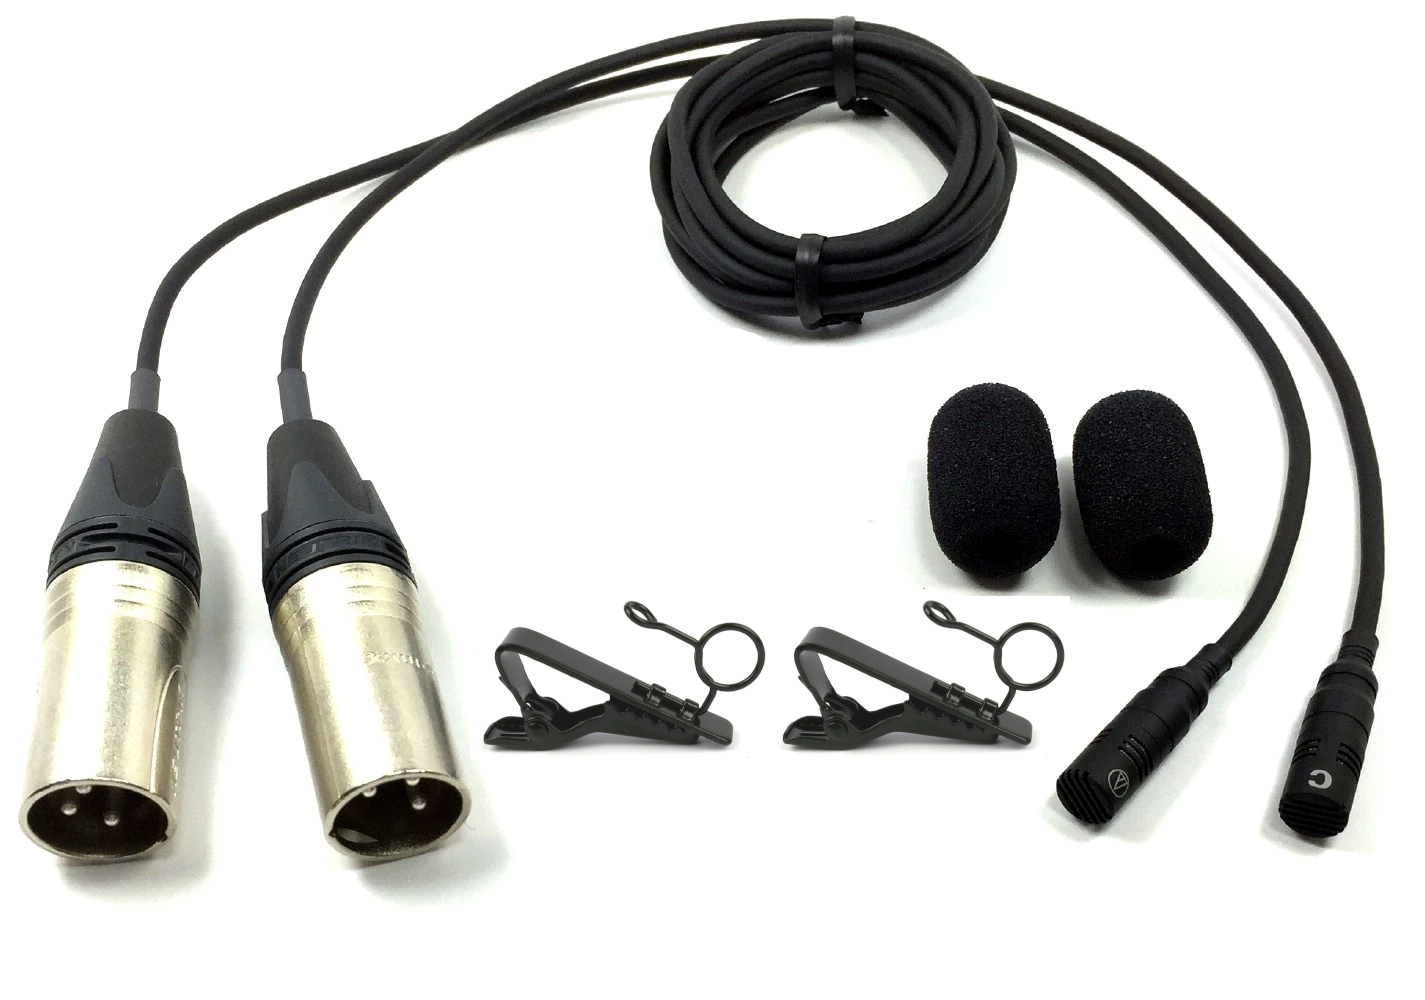 SP-CMC-8-PHANTOM - Premium Audio Technica Cardioid Slimline Stereo Microphones Questions & Answers